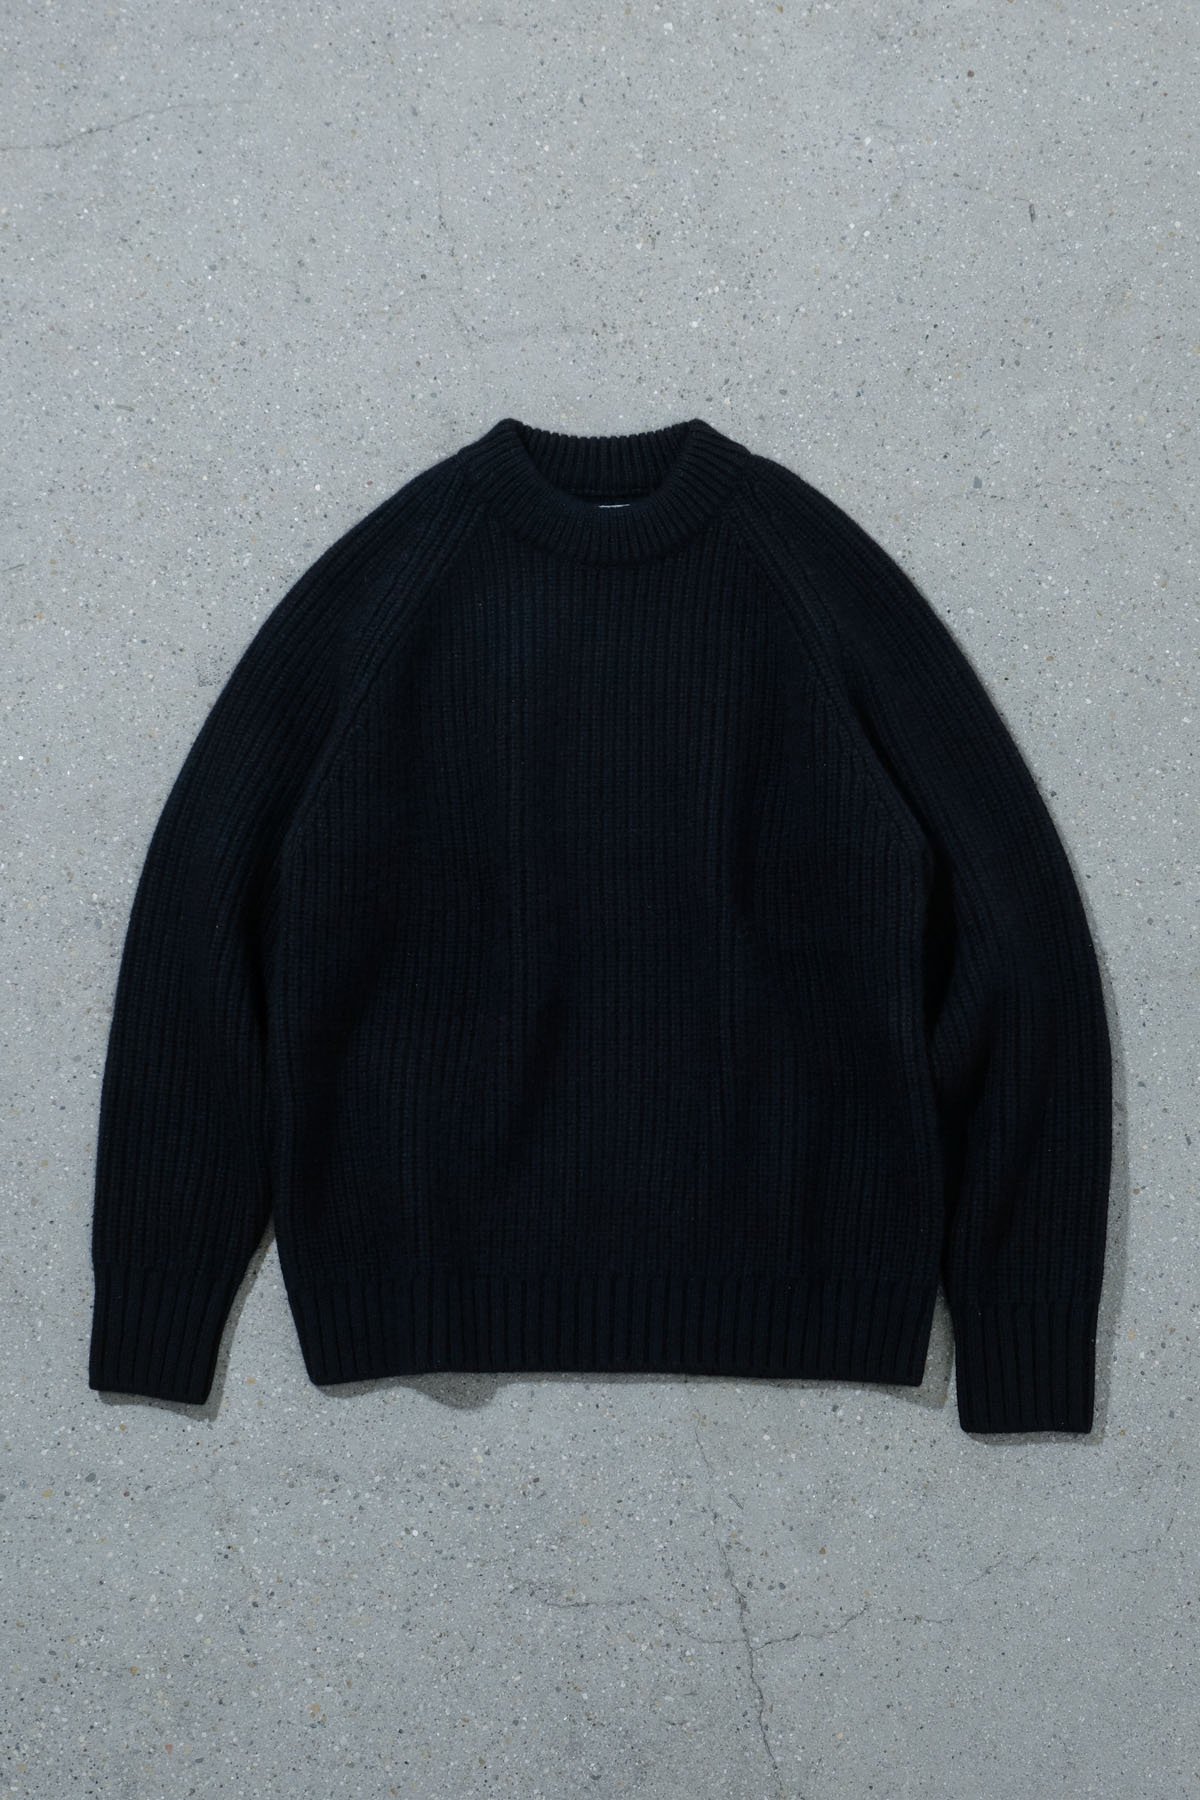 A.PRESSE / Fisherman Pullover Sweater